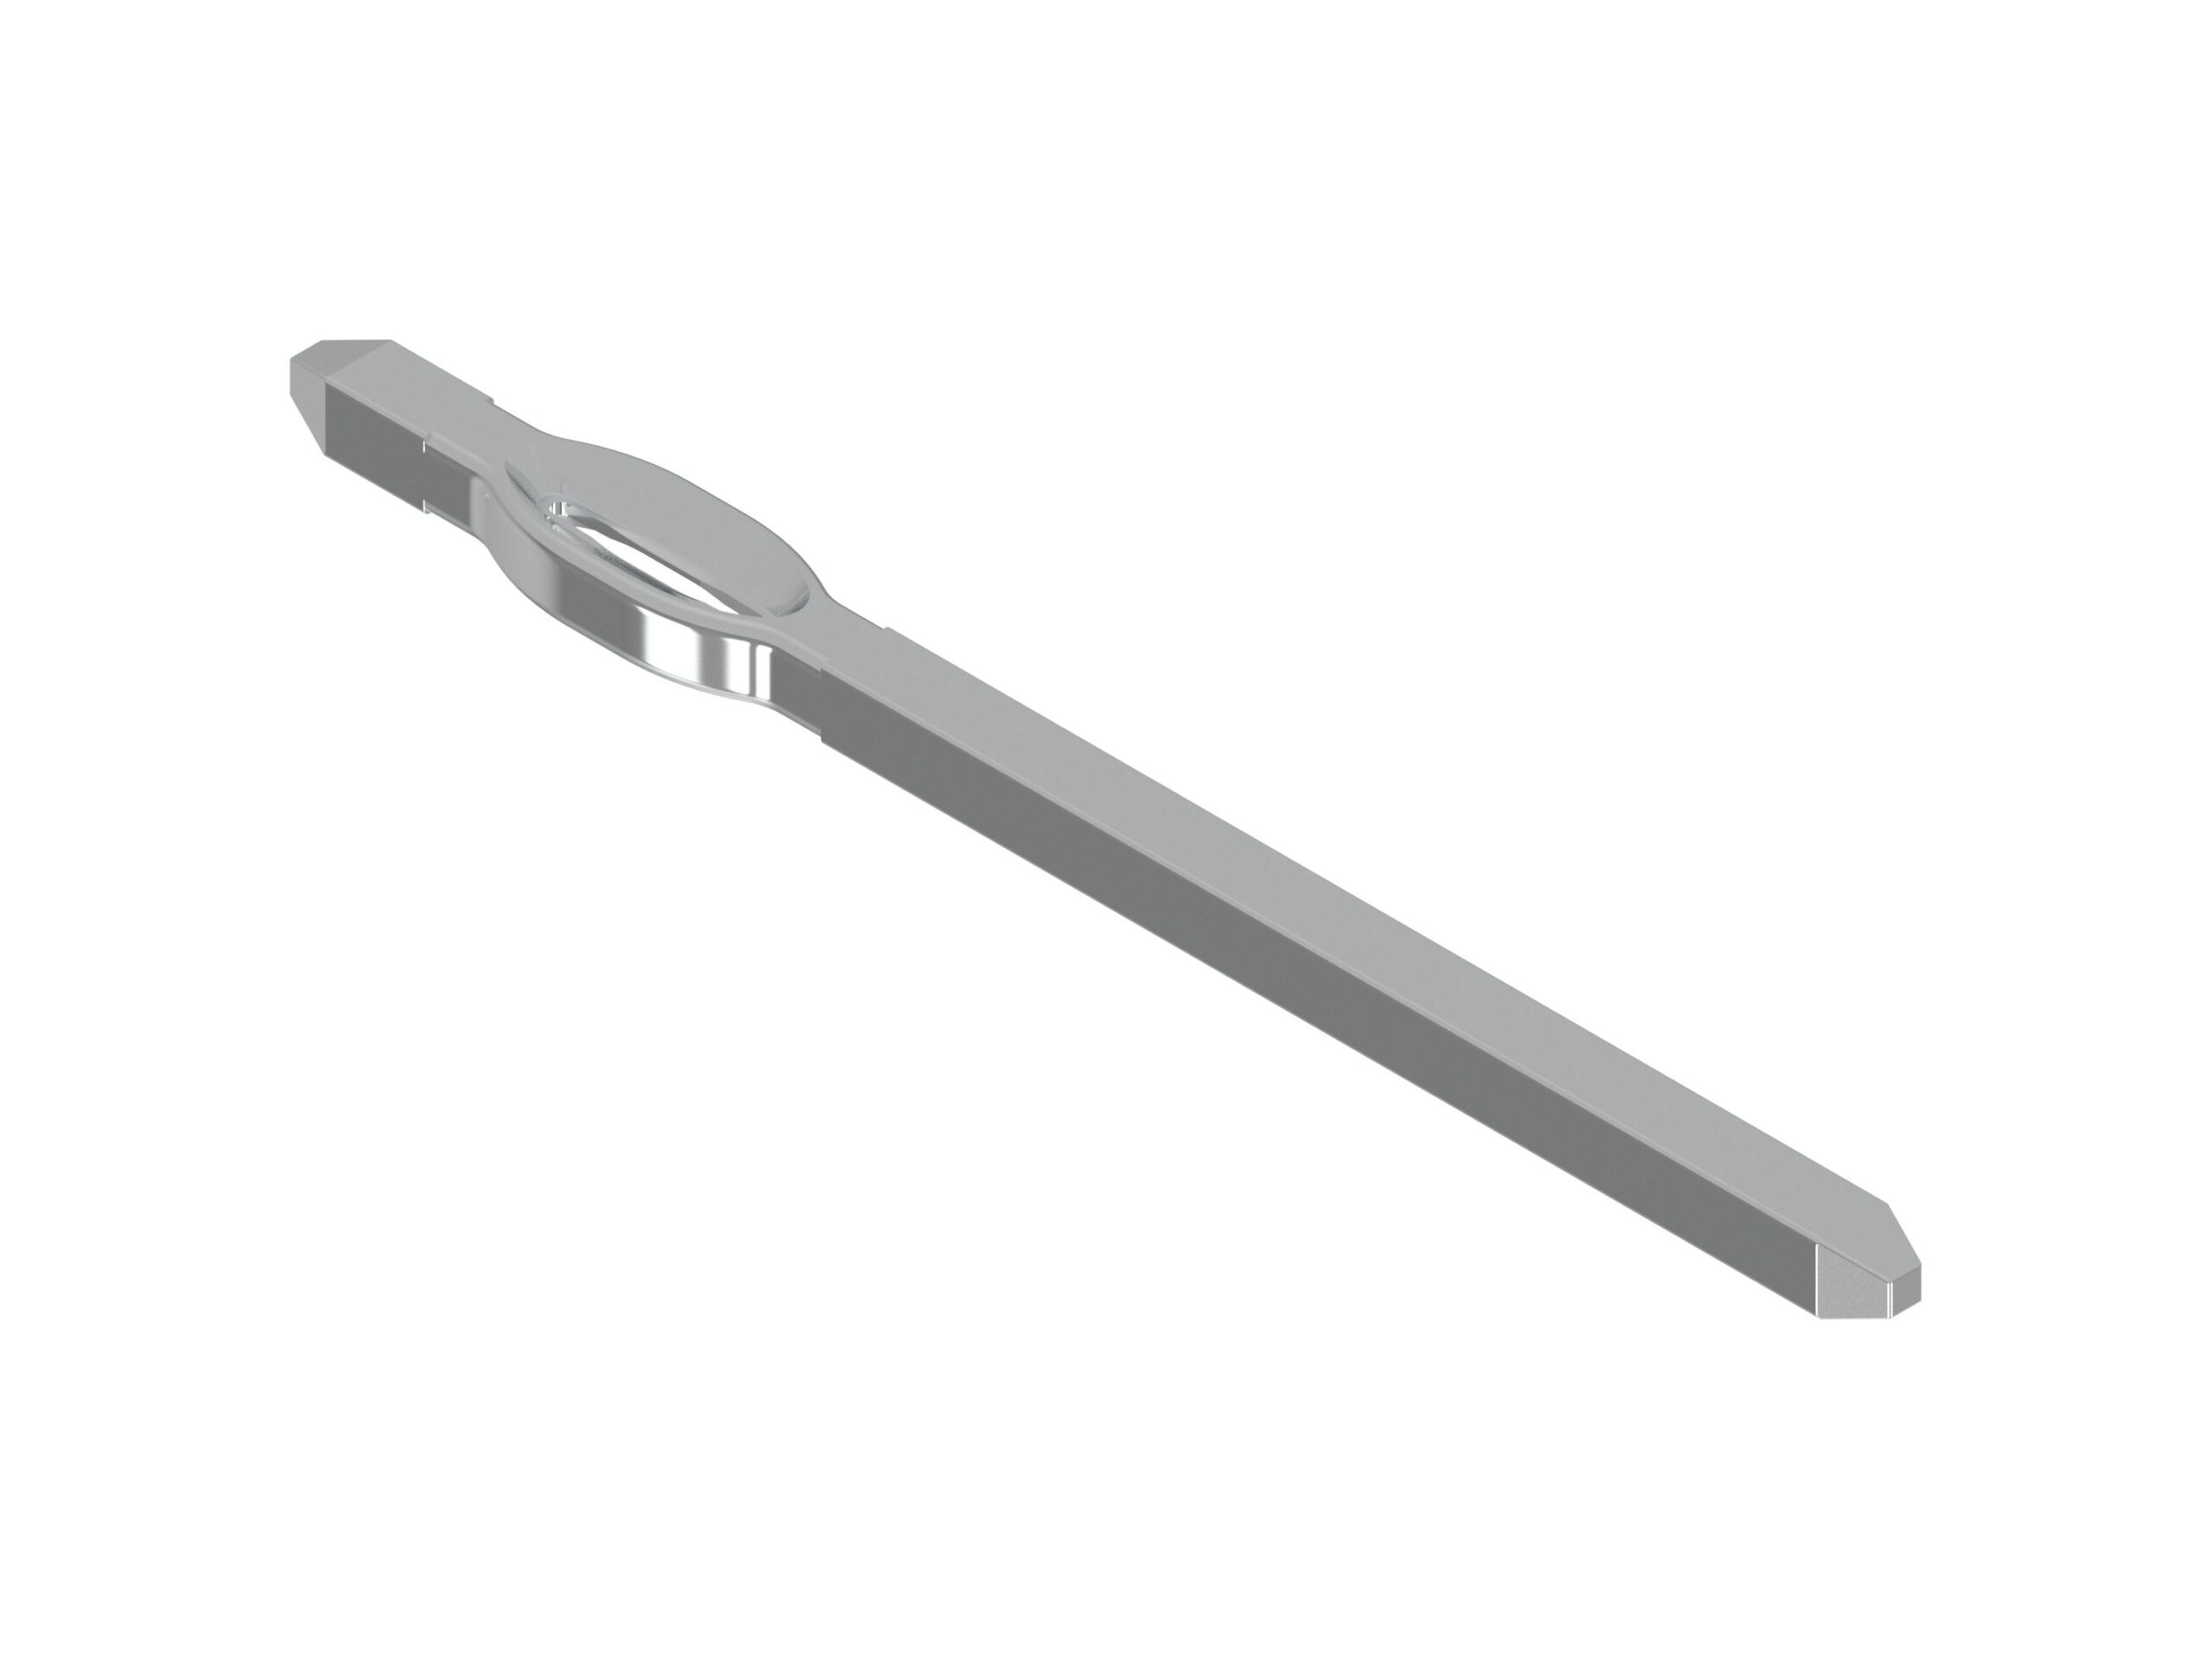 Needle-eye(EON) type Press-fit pin / terminal